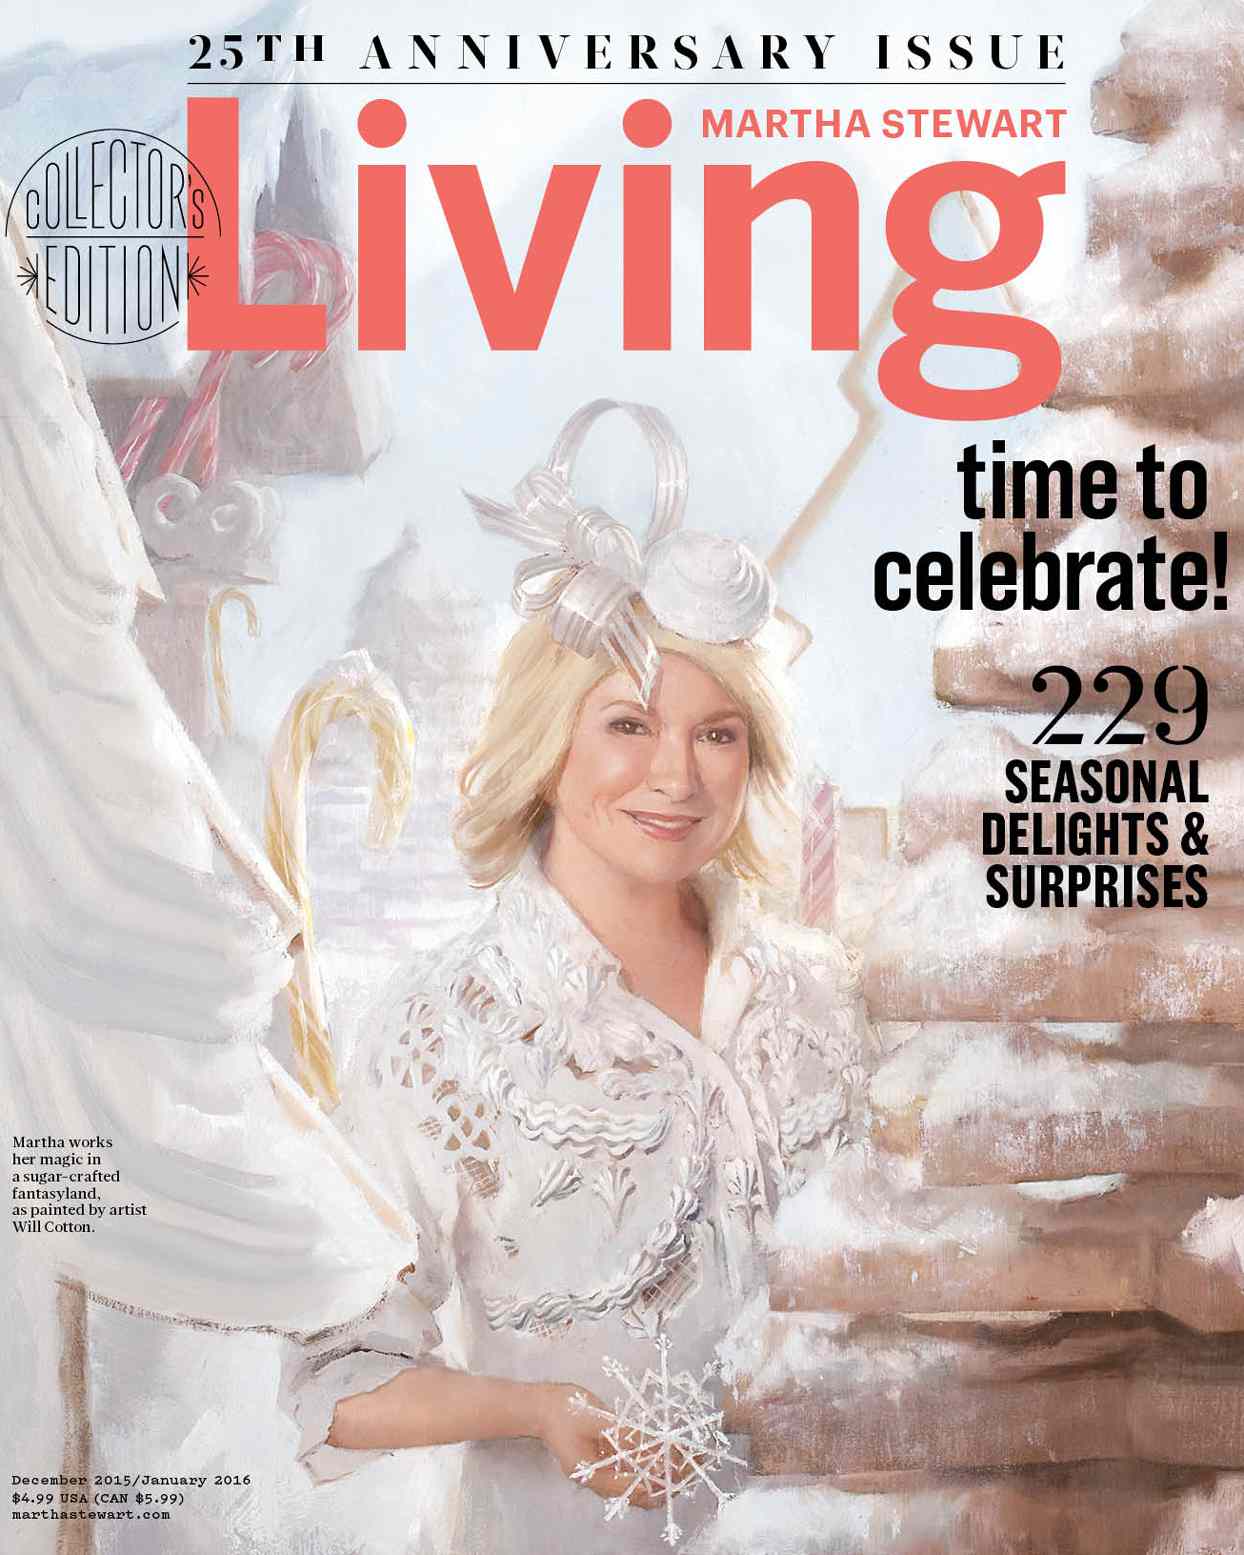 Martha Stewart Living December 2015 Cover